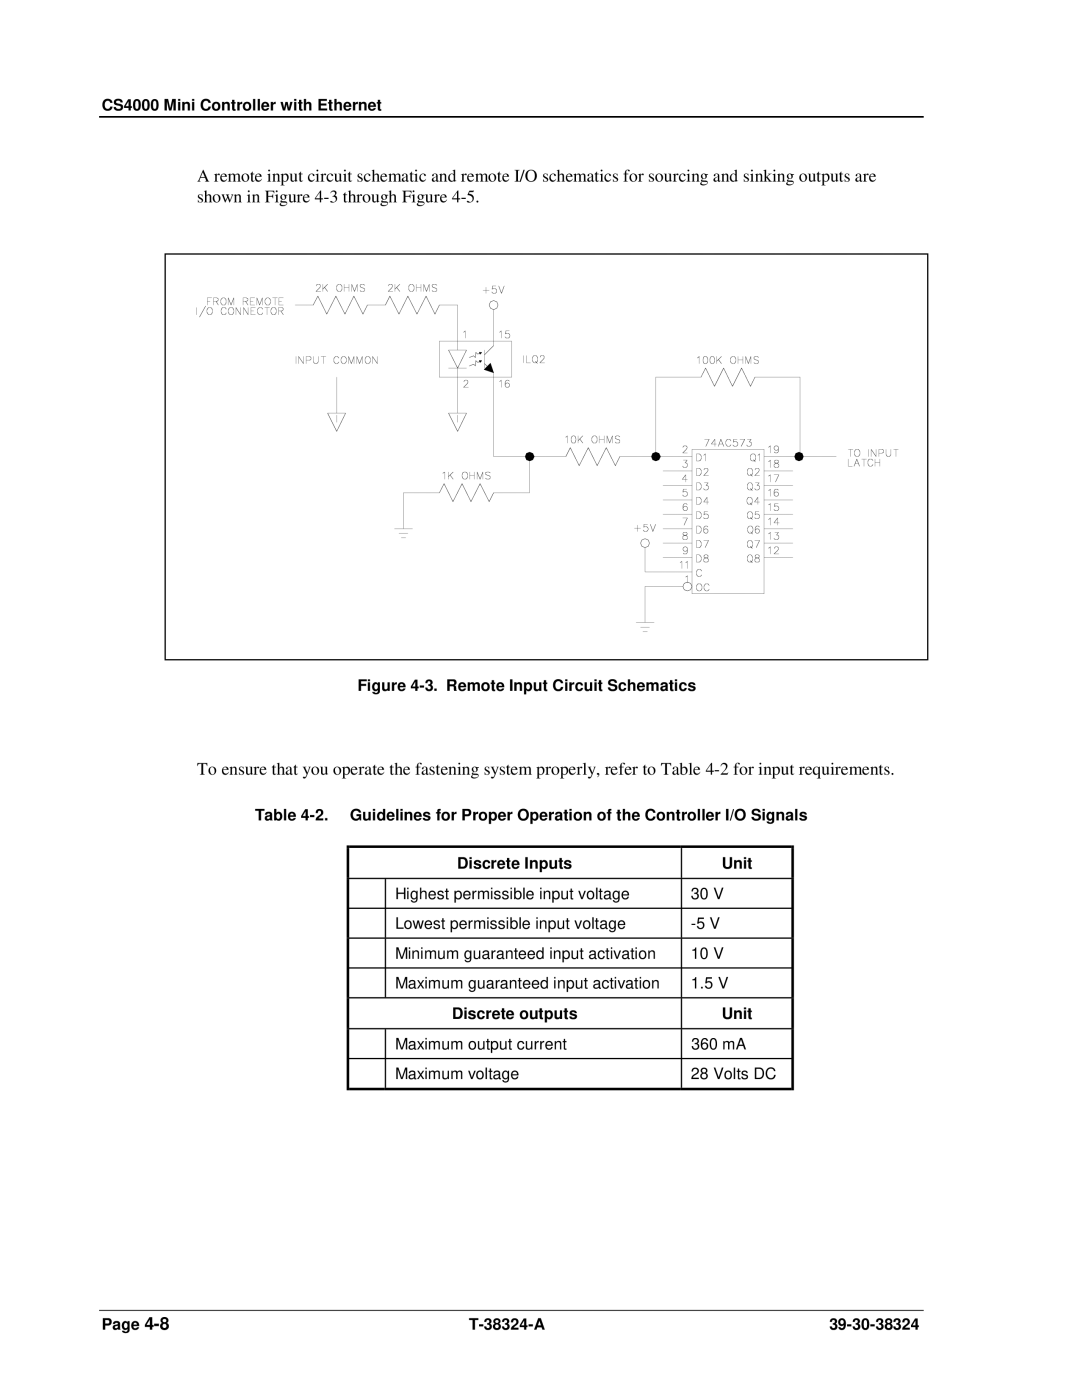 SPX Cooling Technologies CS4000 manual Remote Input Circuit Schematics 